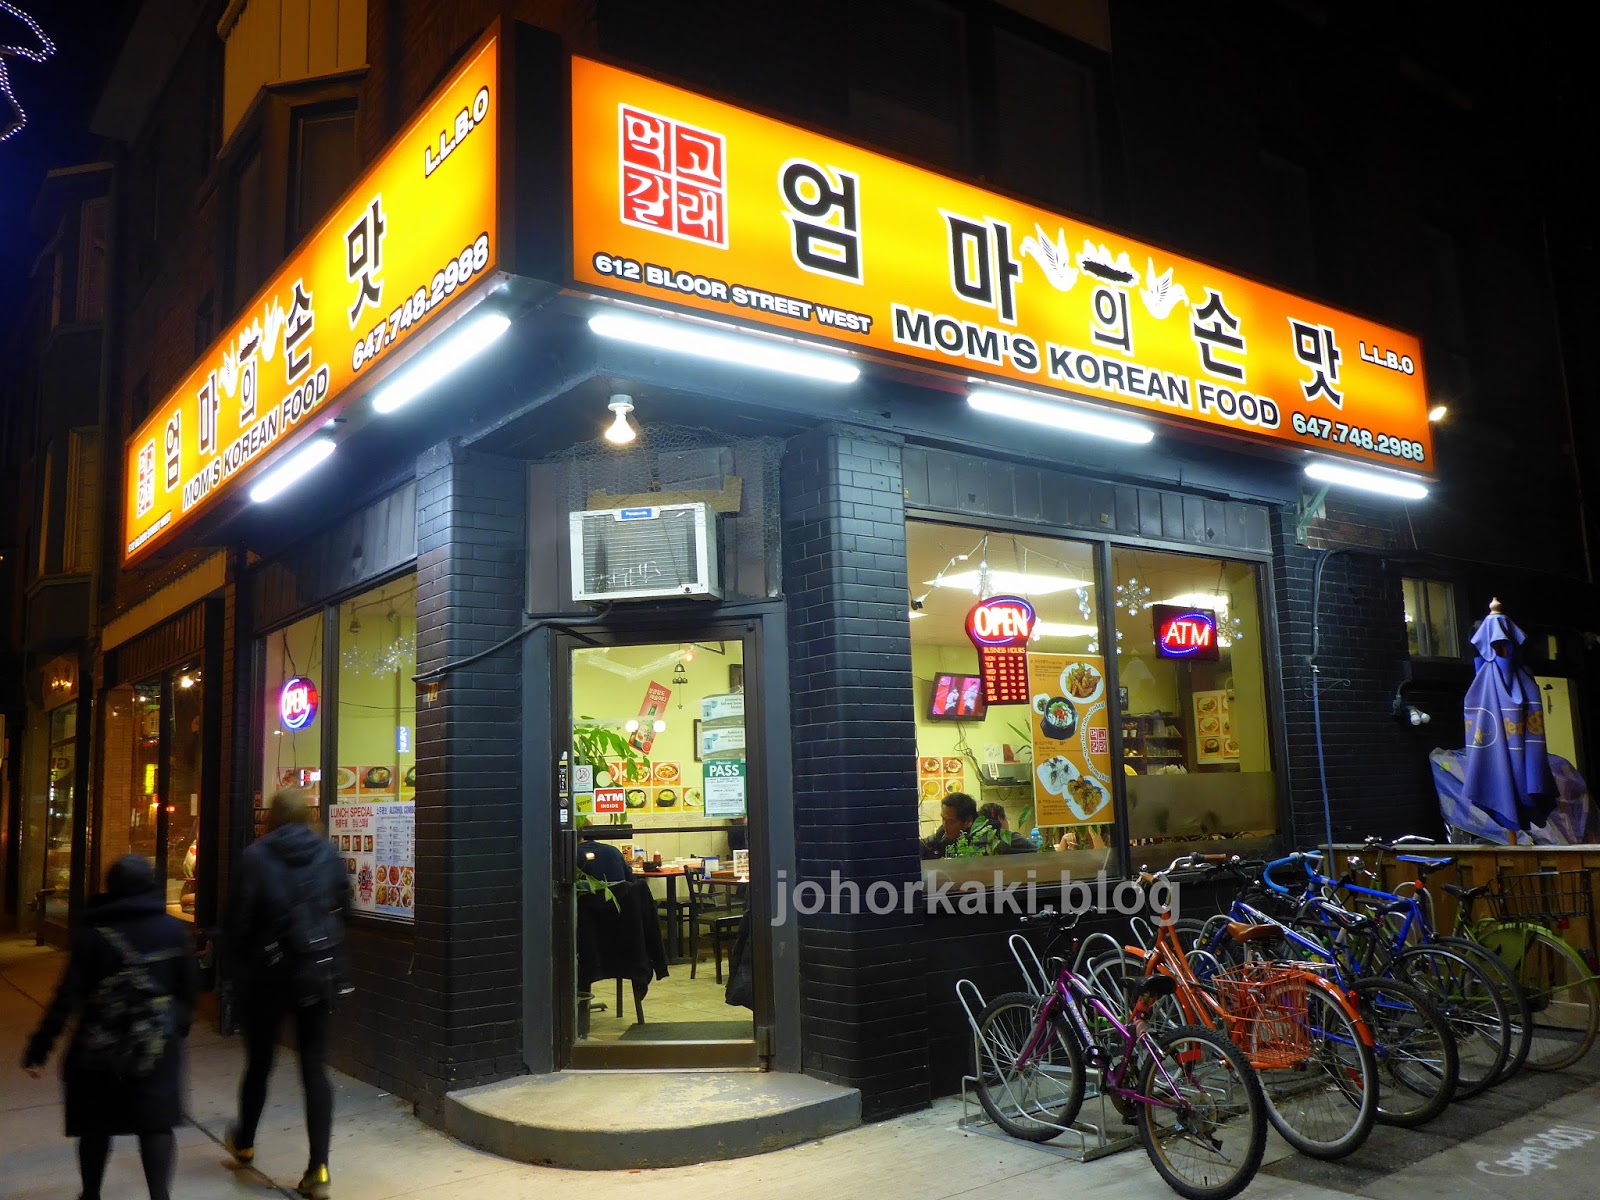 Gamjatang. Mom's Korean Food. Koreatown Toronto |Tony Johor Kaki